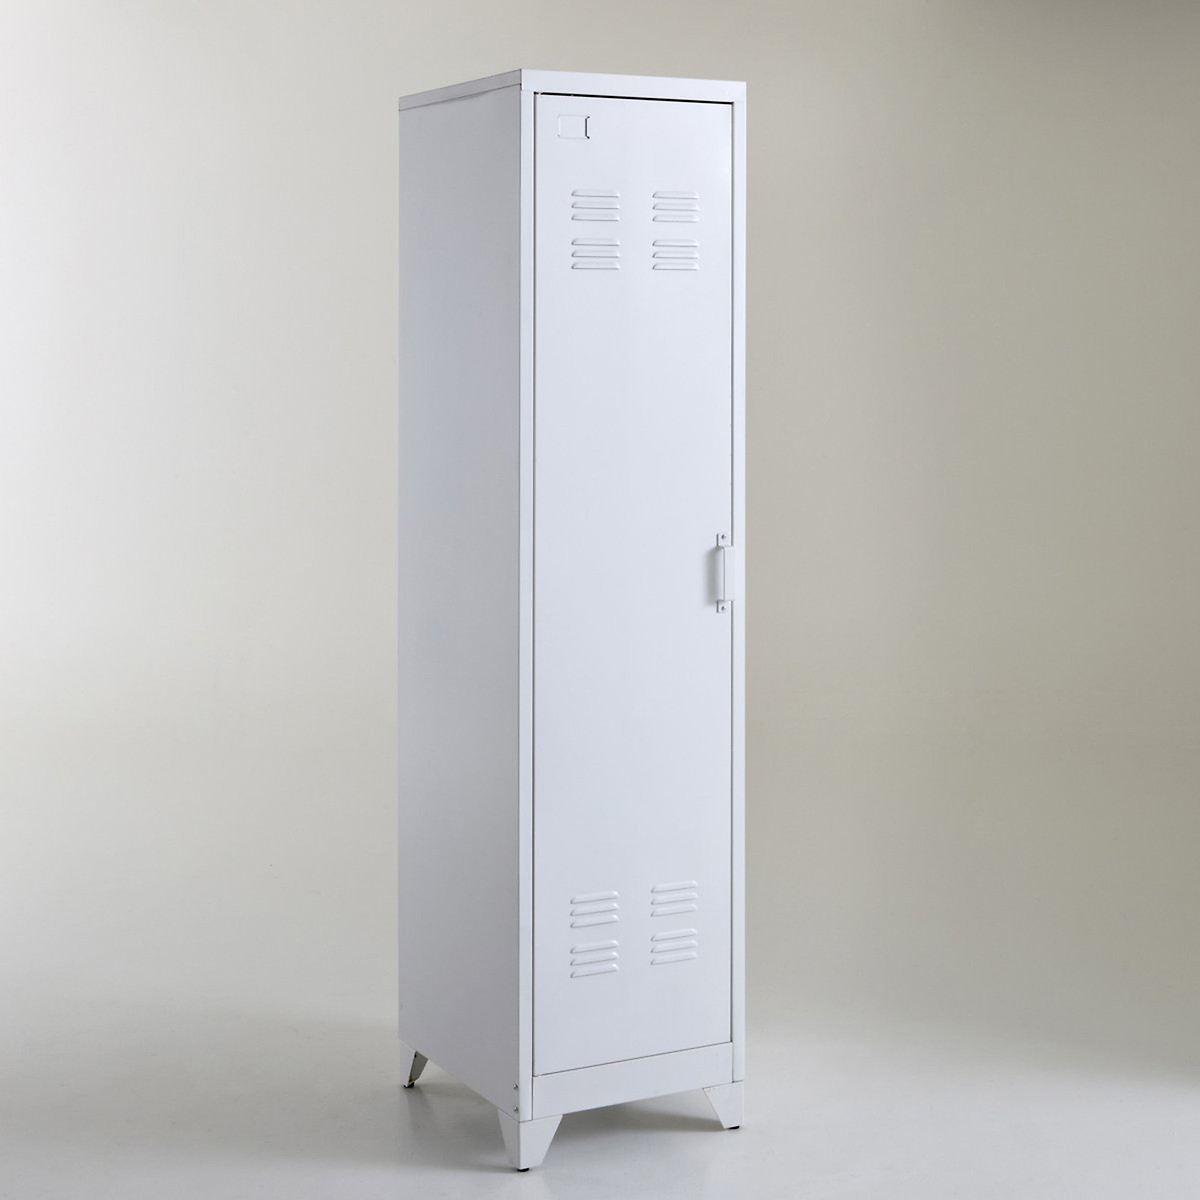 american-style locker storage unit La Interieurs | La Redoute